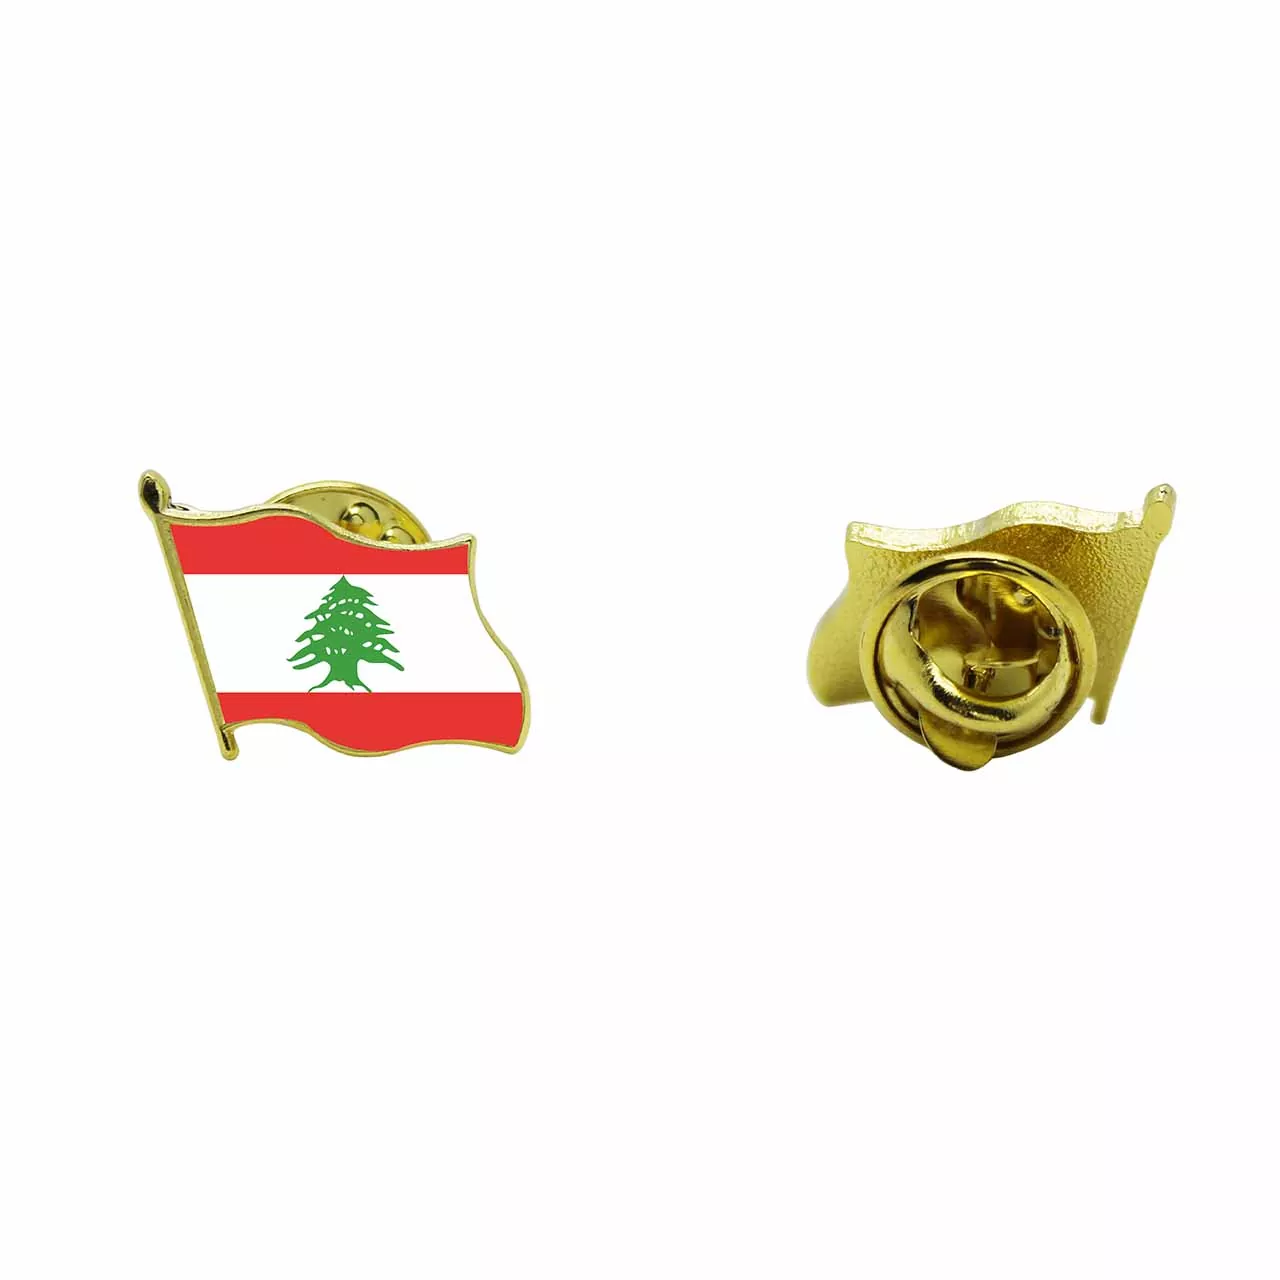 Lebanon National Flag Lapel Pins